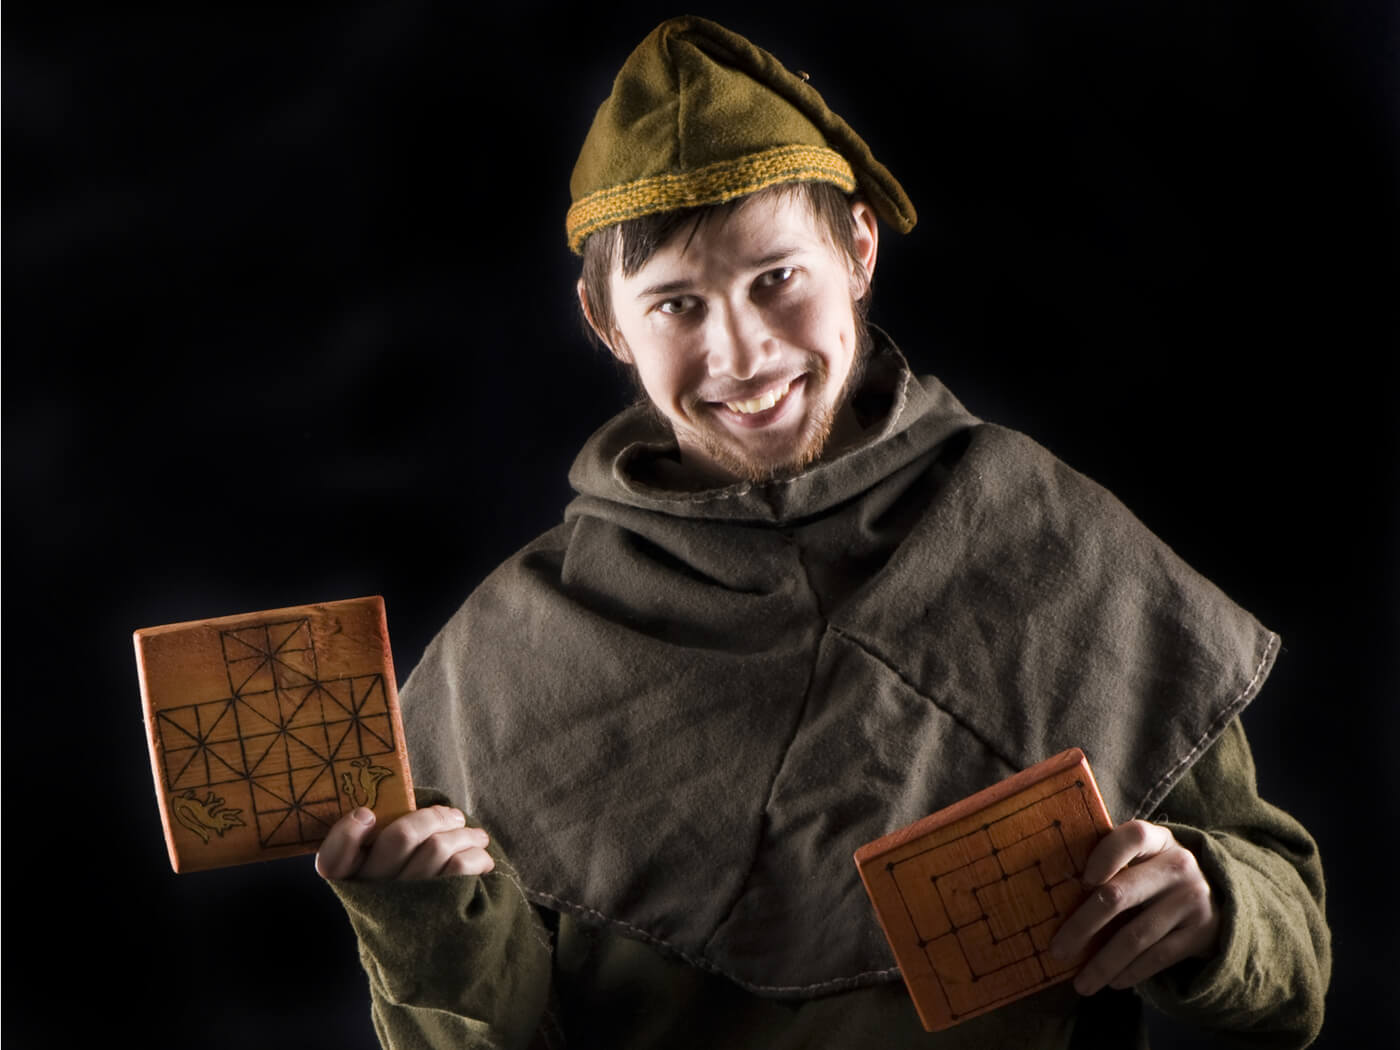 Descopera Carcassonne, jocul de strategie care te transpune in vremuri medievale